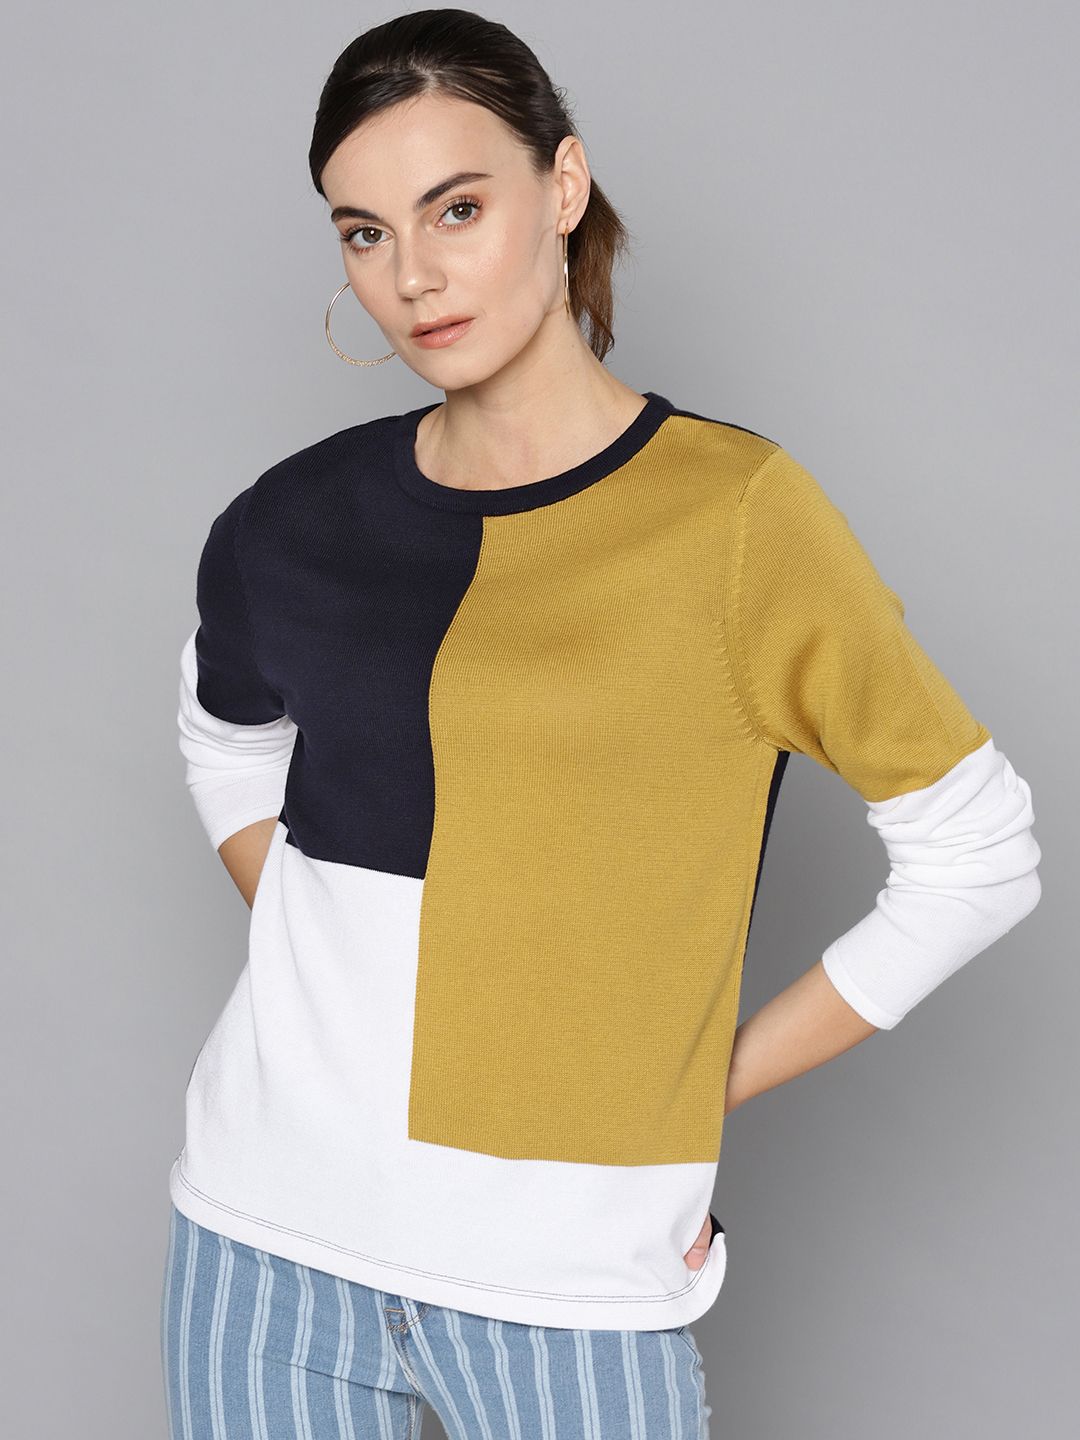 STREET 9 Women Mustard Yellow & Navy Blue Colourblocked Sweater Price in India